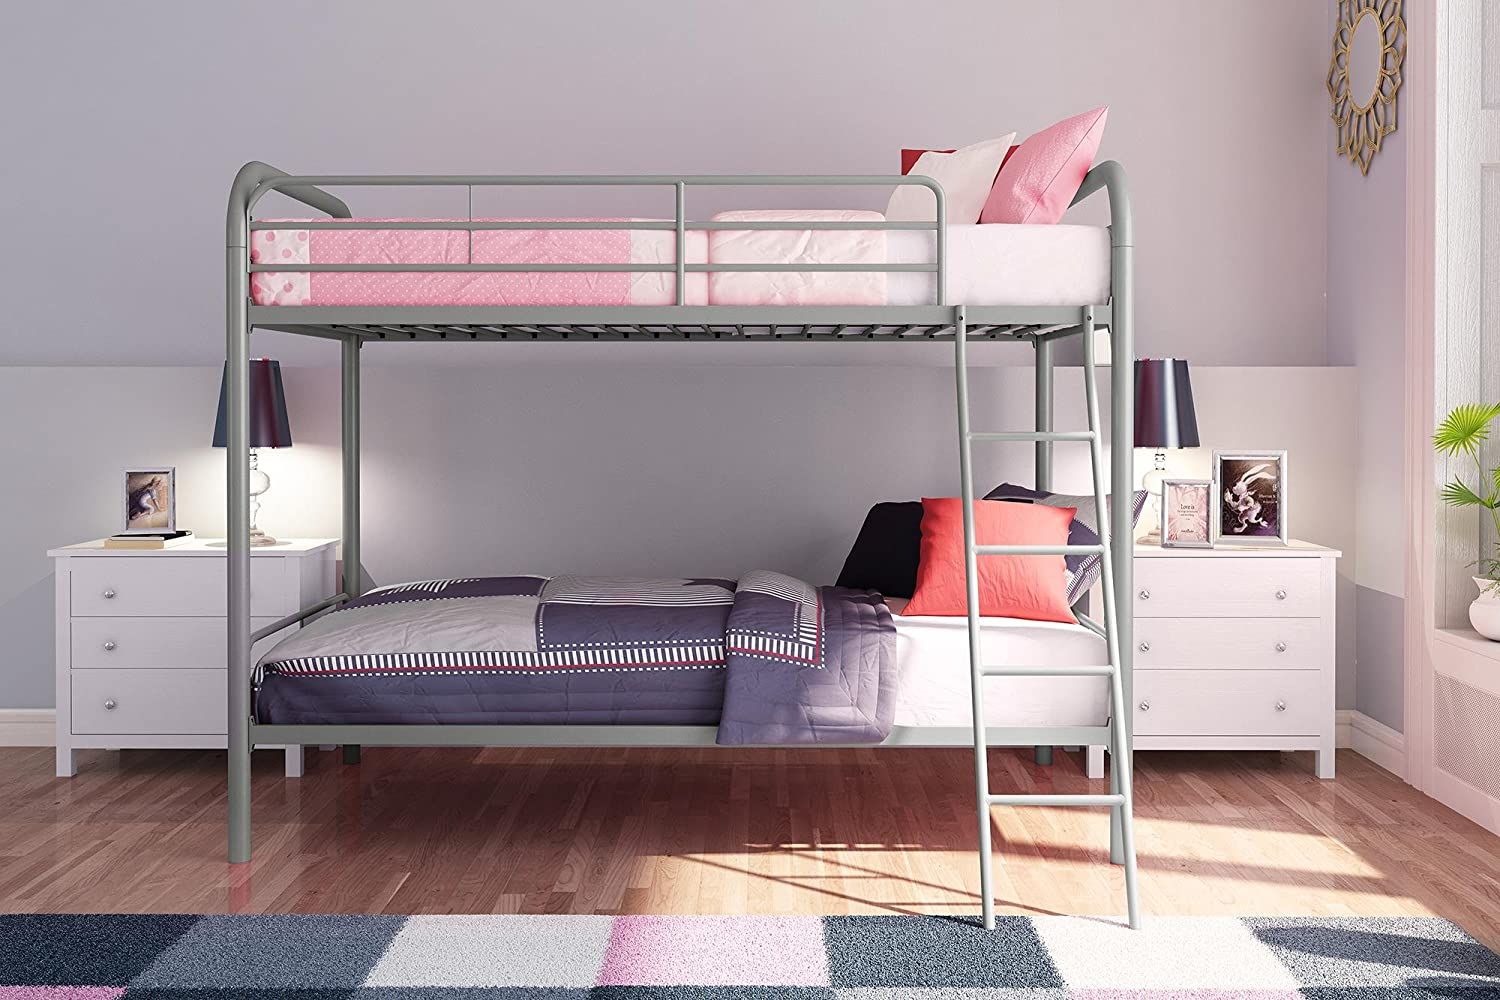 8 Best Bunk Beds 2020 The Strategist, Bunk Bed Slide Sold Separately